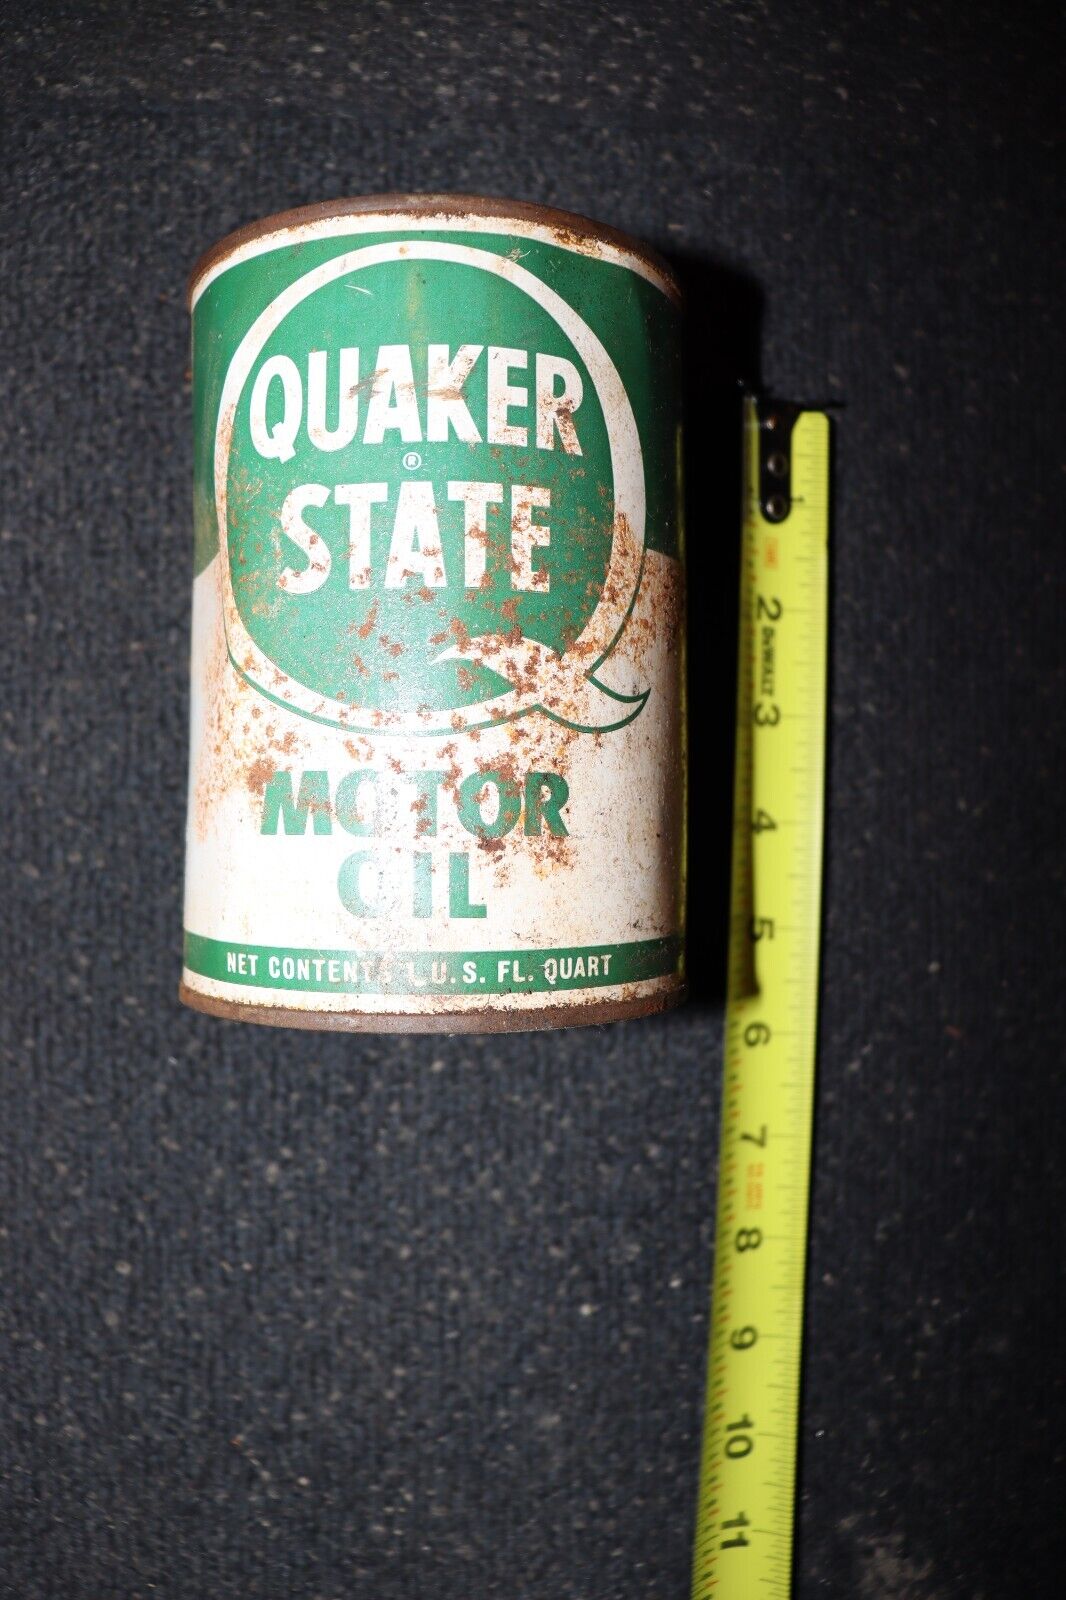 Quaker State Motor Oil Tin Litho 1 Quart Can full Label worn Vintage